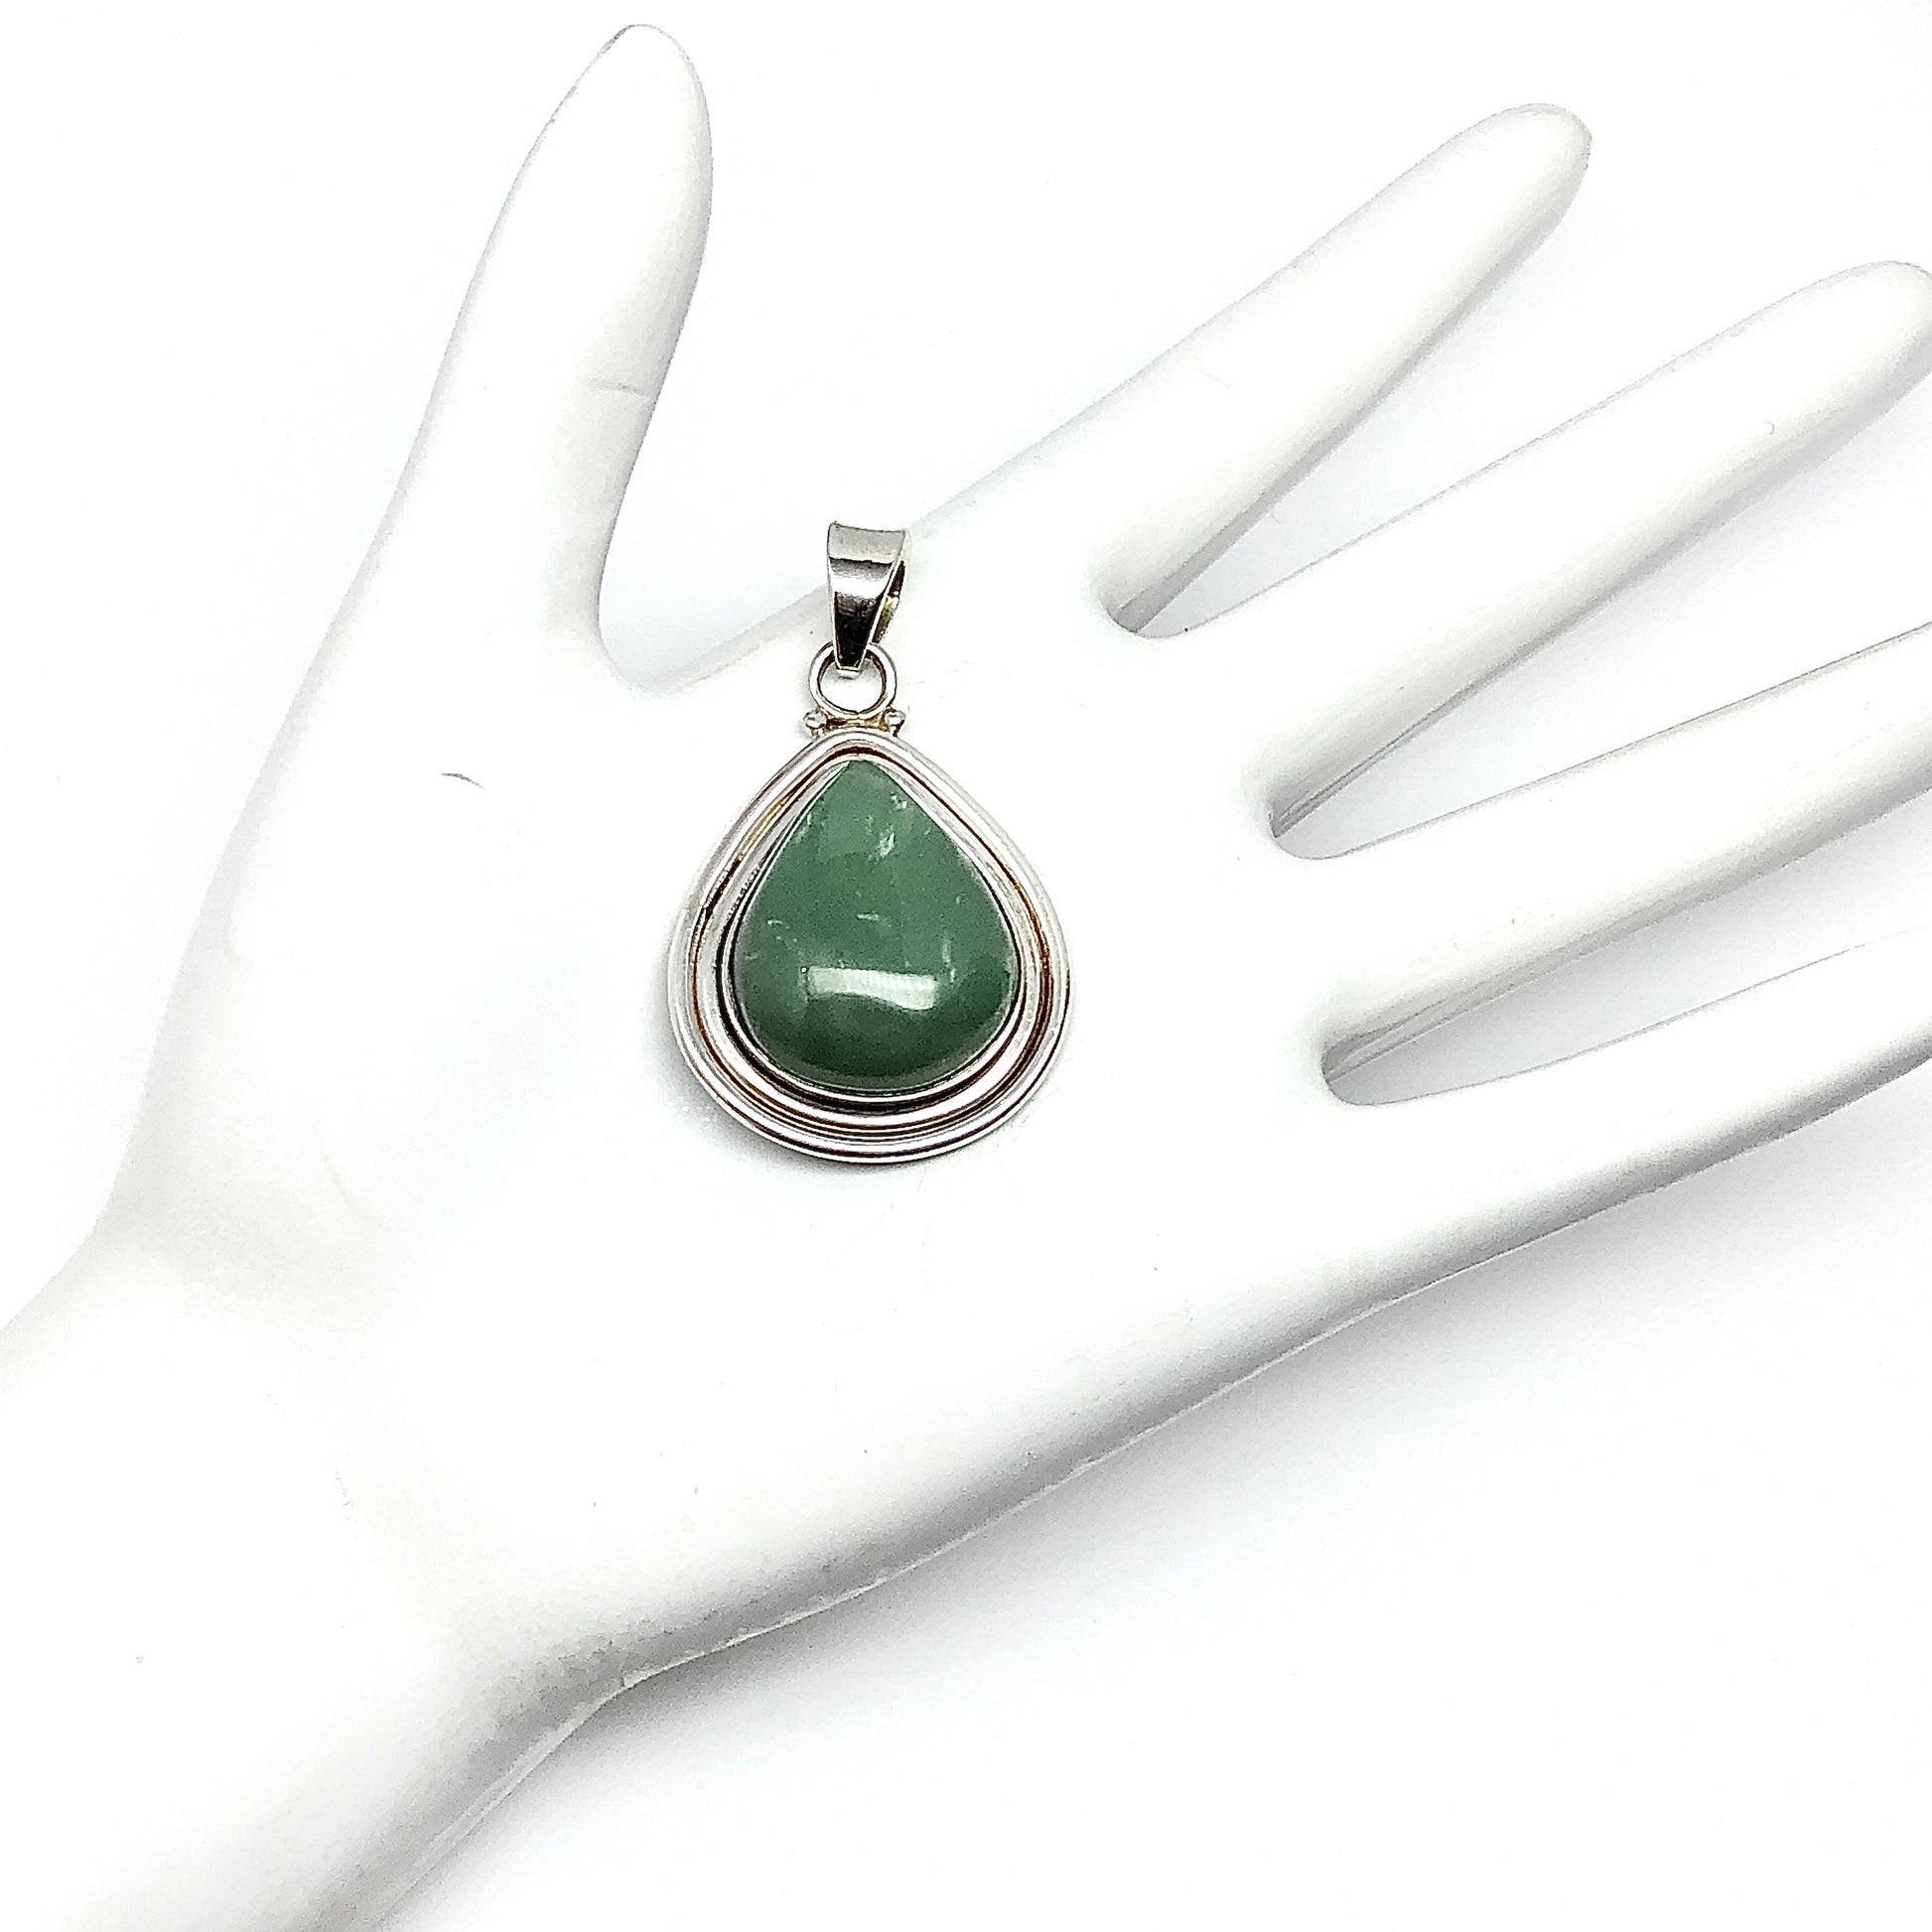 Blingschlingers Jewelry - Sterling Silver Green Stone Pendant